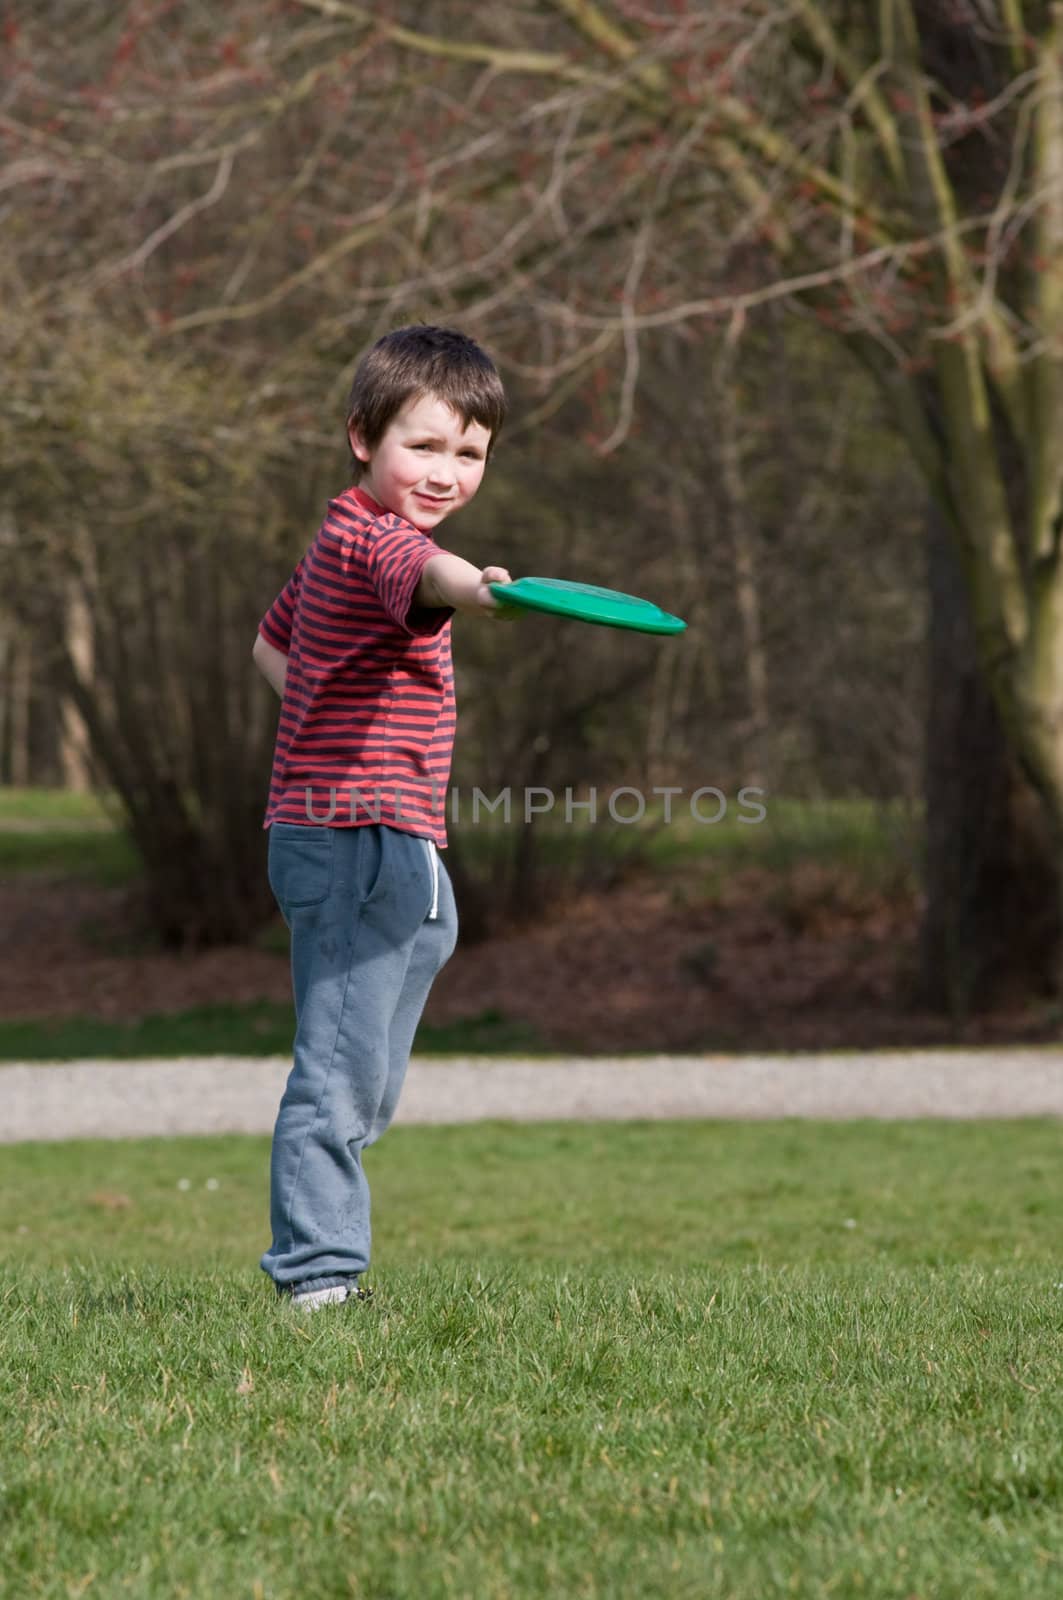 Boy in striped shirt throwing frisbe.